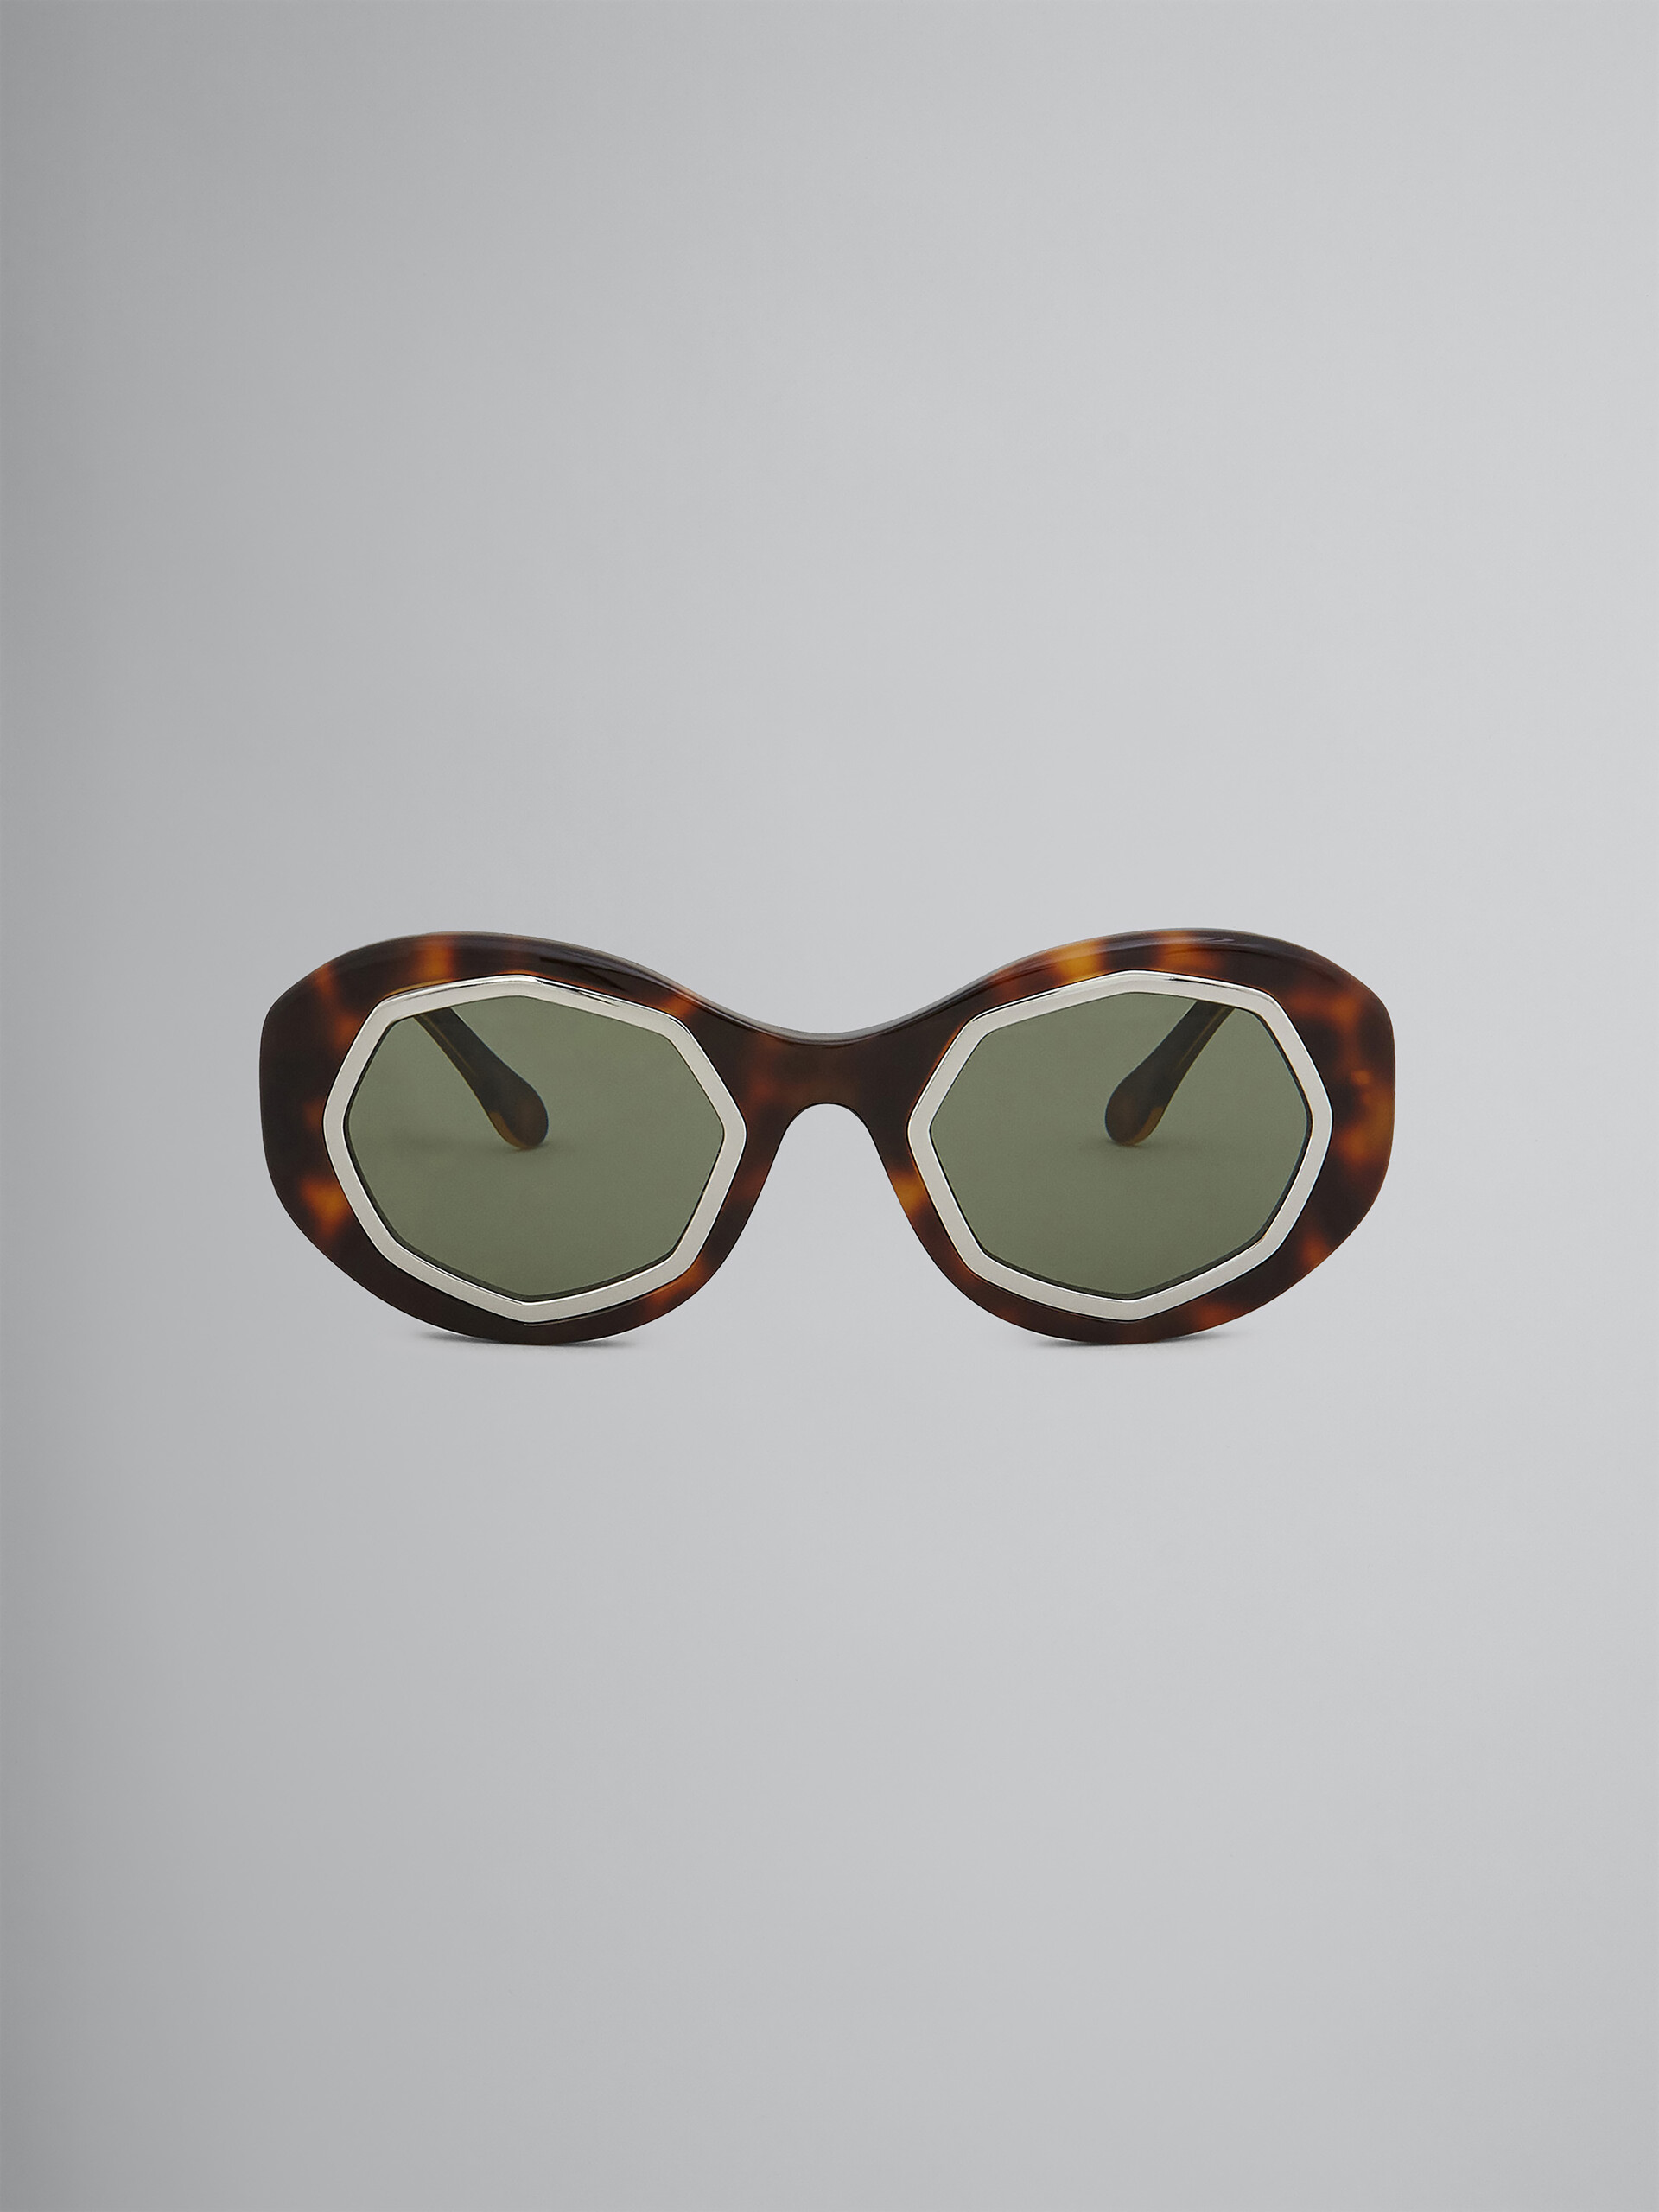 Tortoiseshell MOUNT BRUMO acetate sunglasses - Optical - Image 1